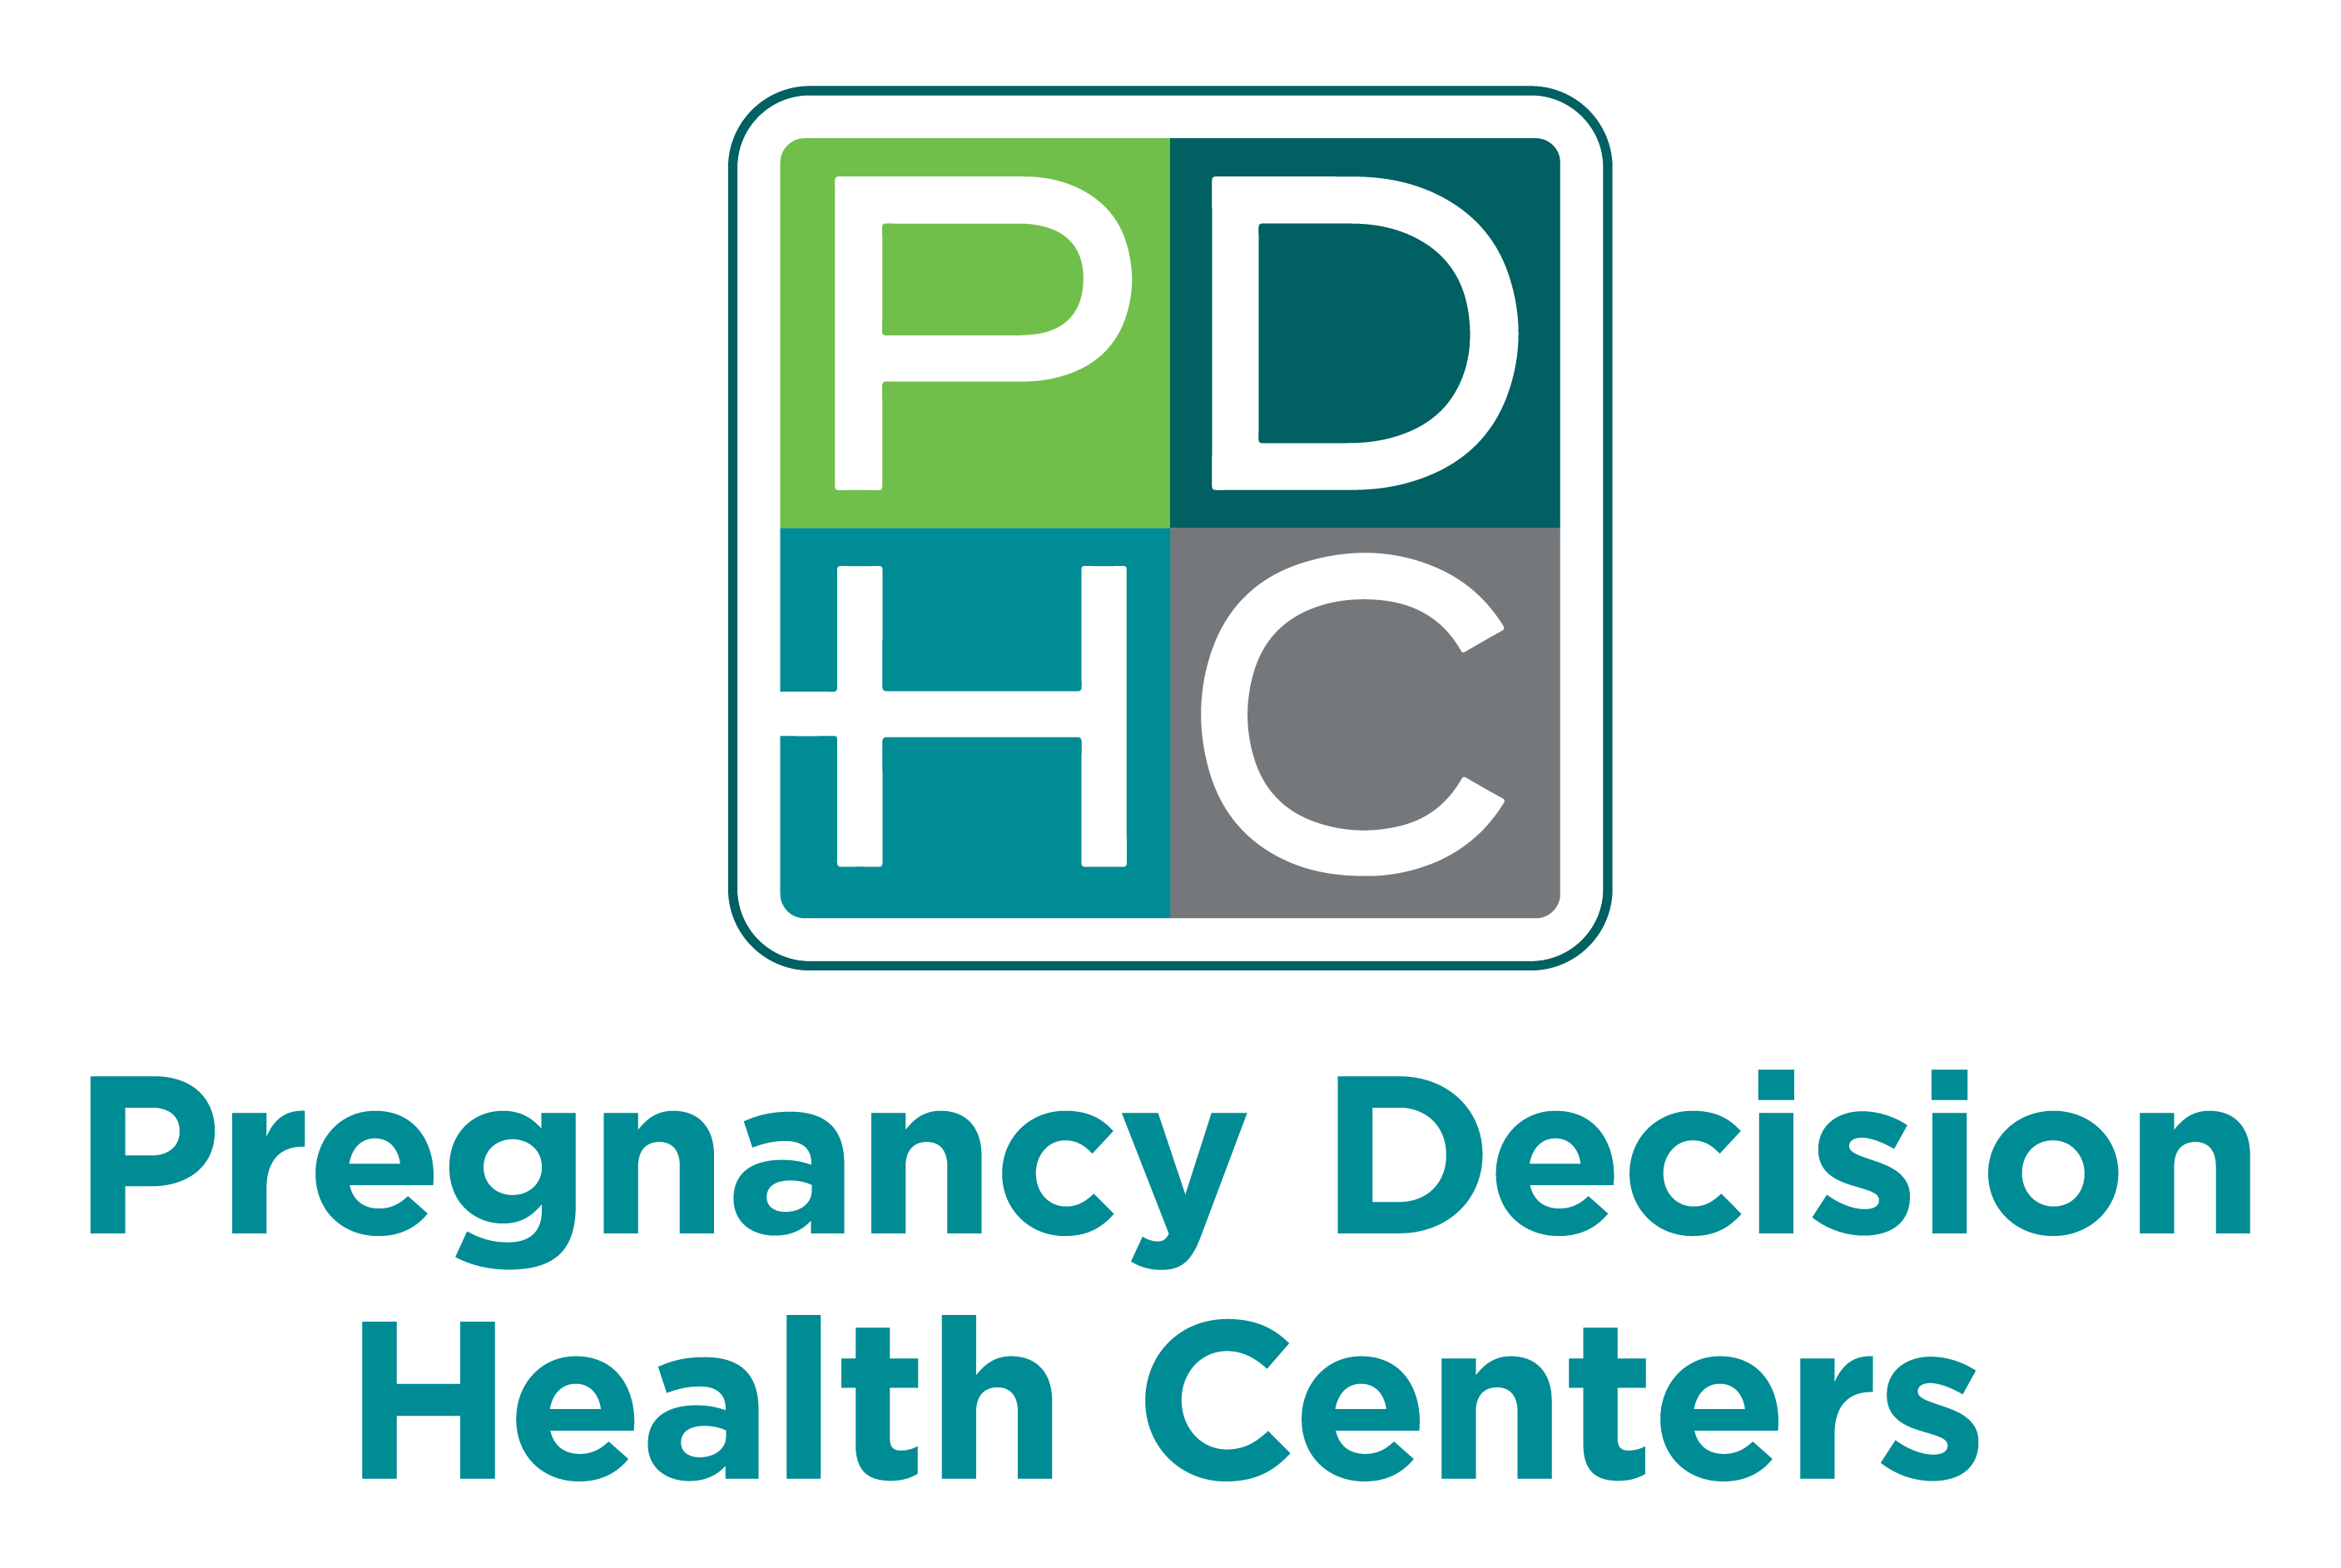 Pregnancy Decision Health Centers logo